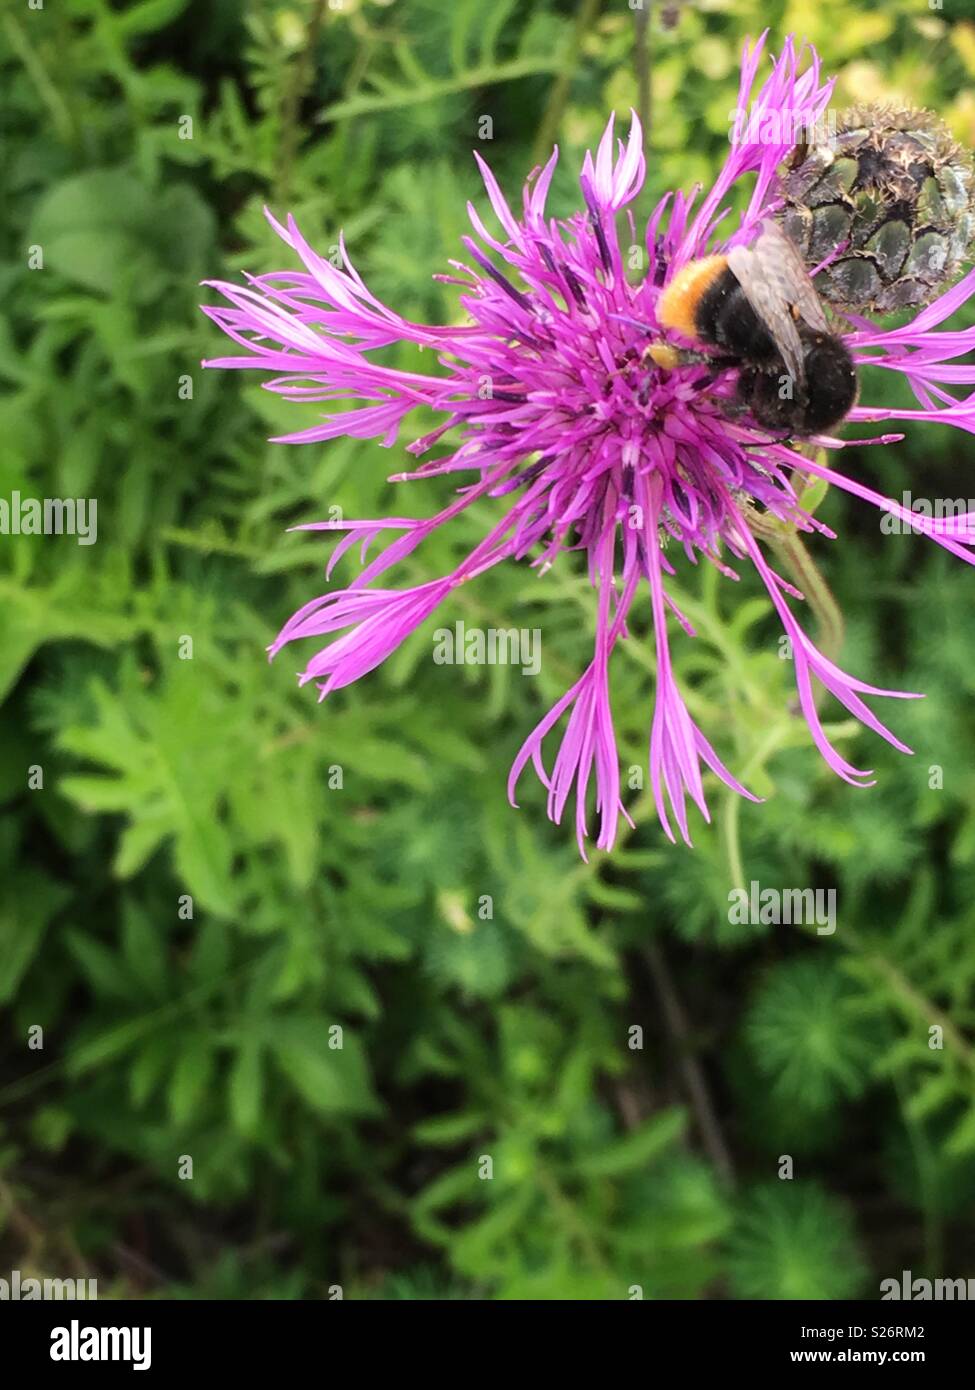 Bumblebee on Purple Flower Stock Photo